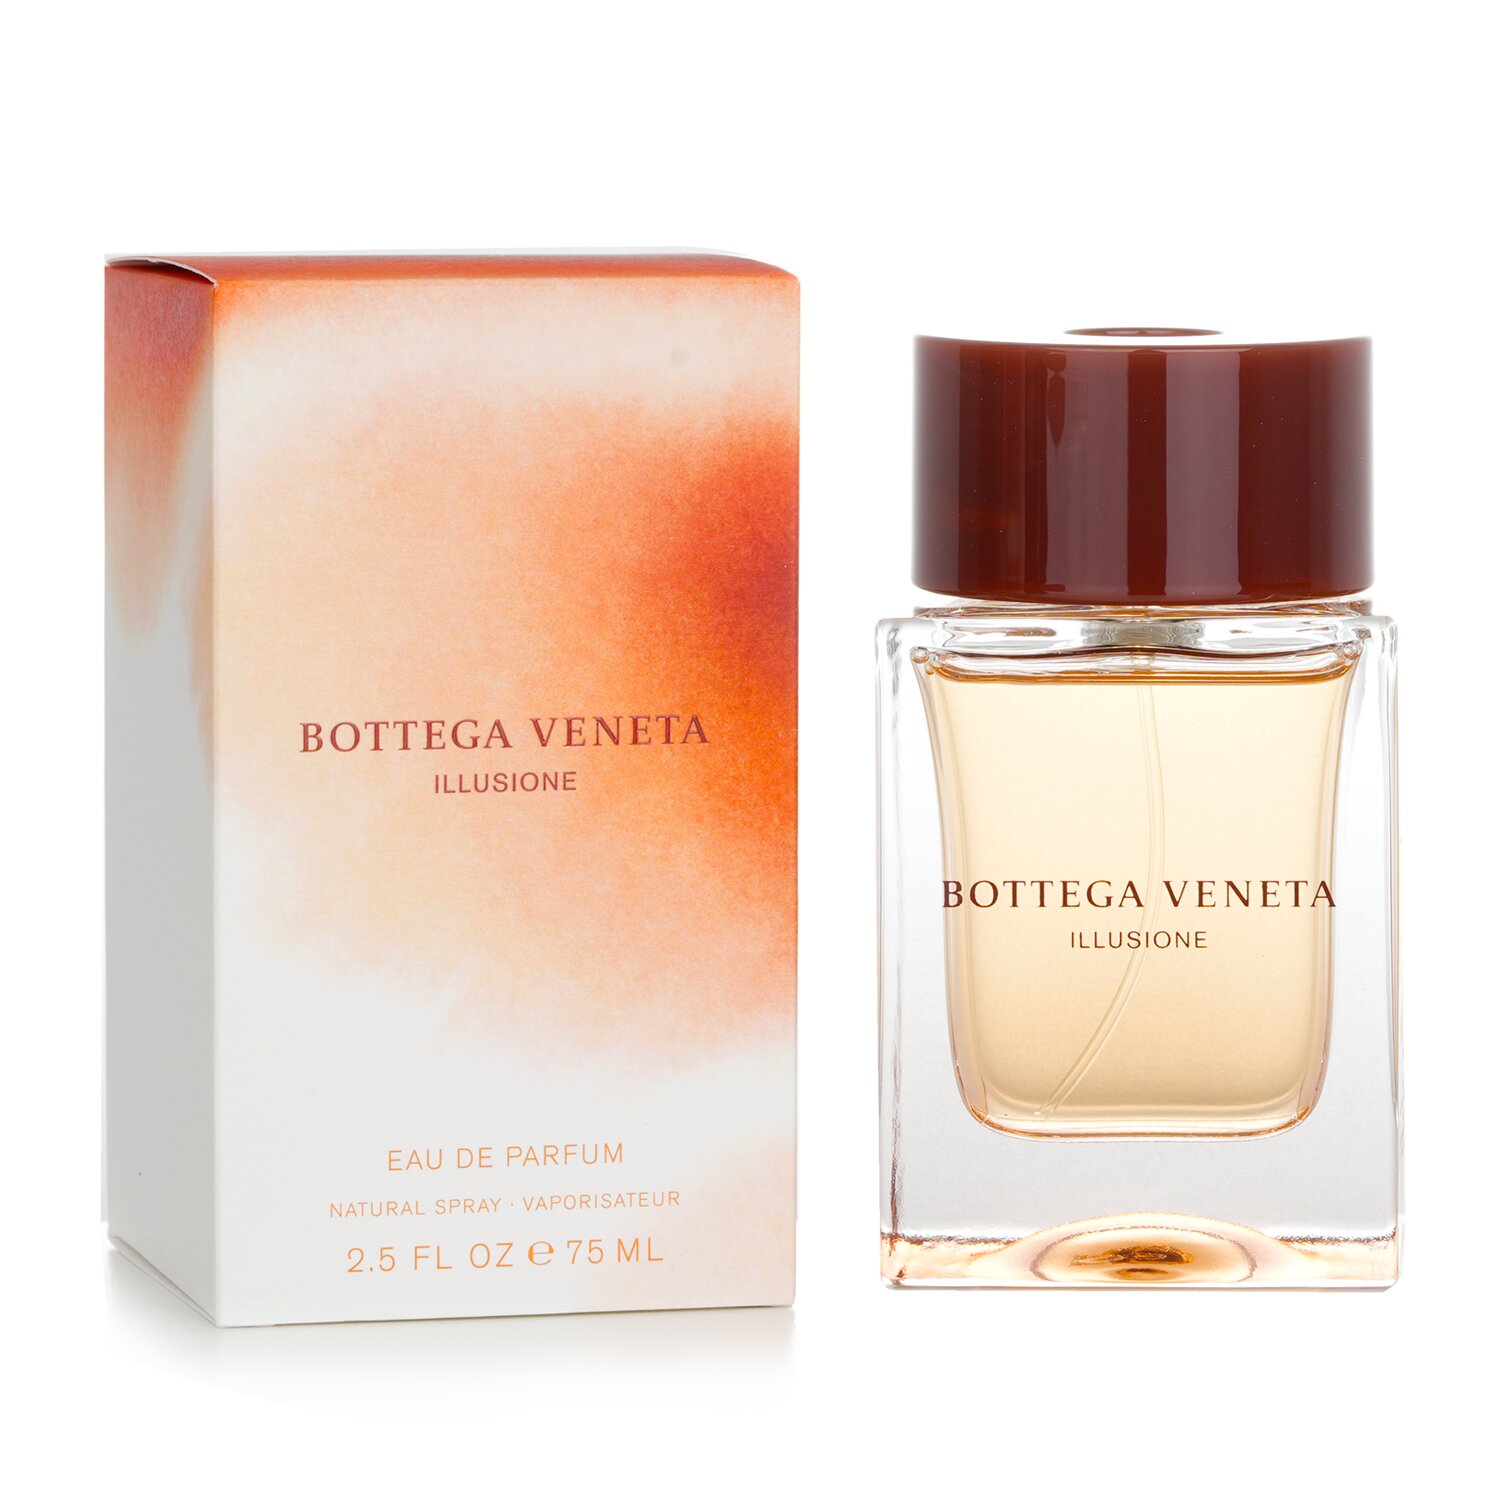 寶緹嘉BV Bottega Veneta - Illusione香水噴霧| 草莓網Strawberrynet直